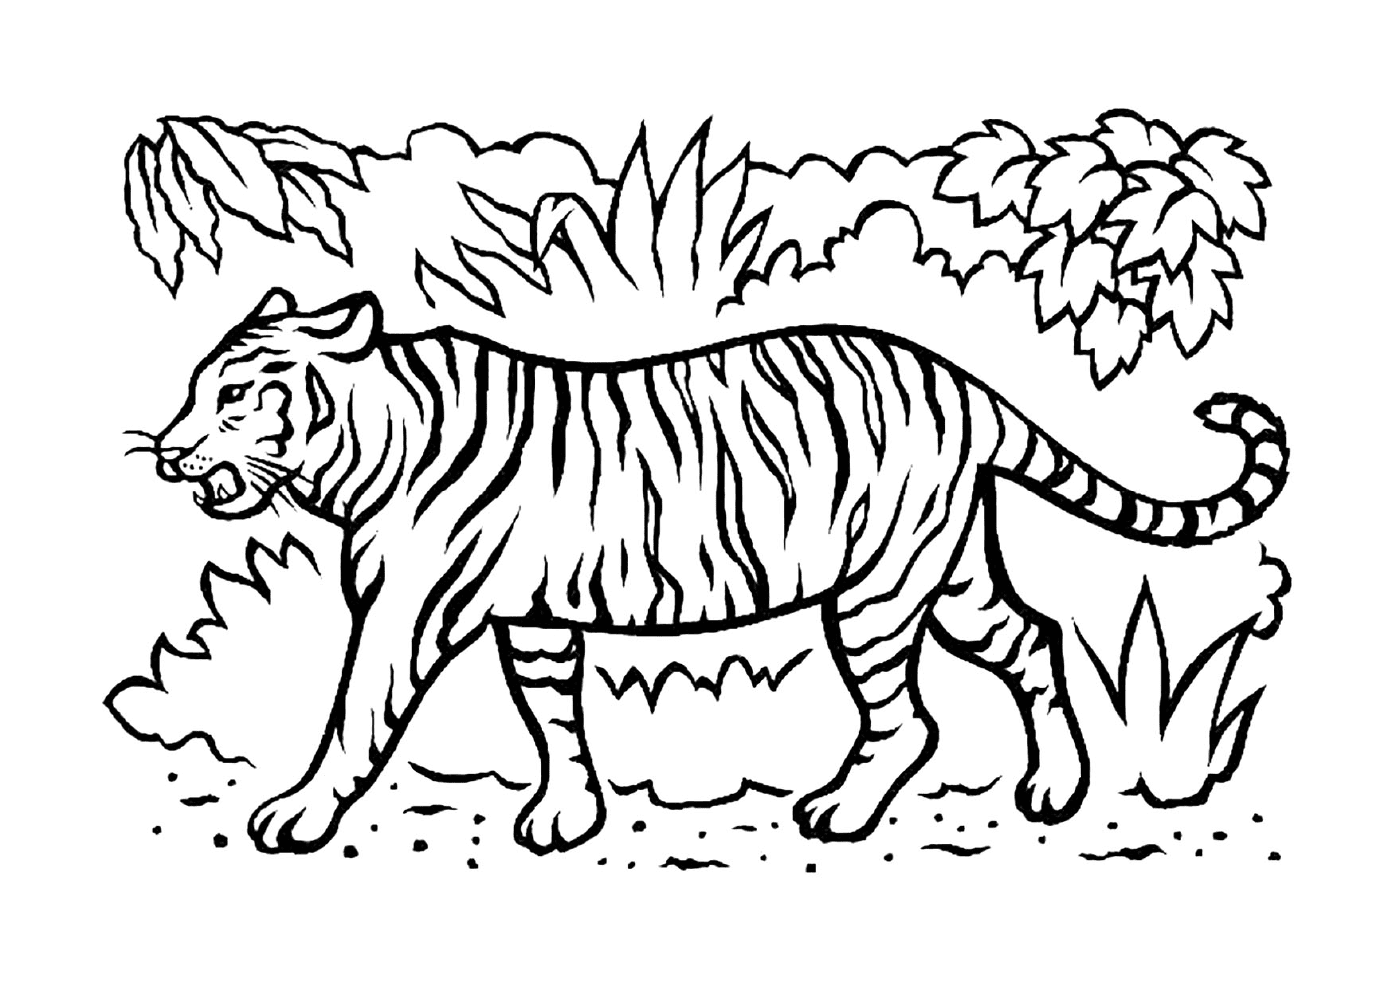  A beautiful tiger in the savannah 